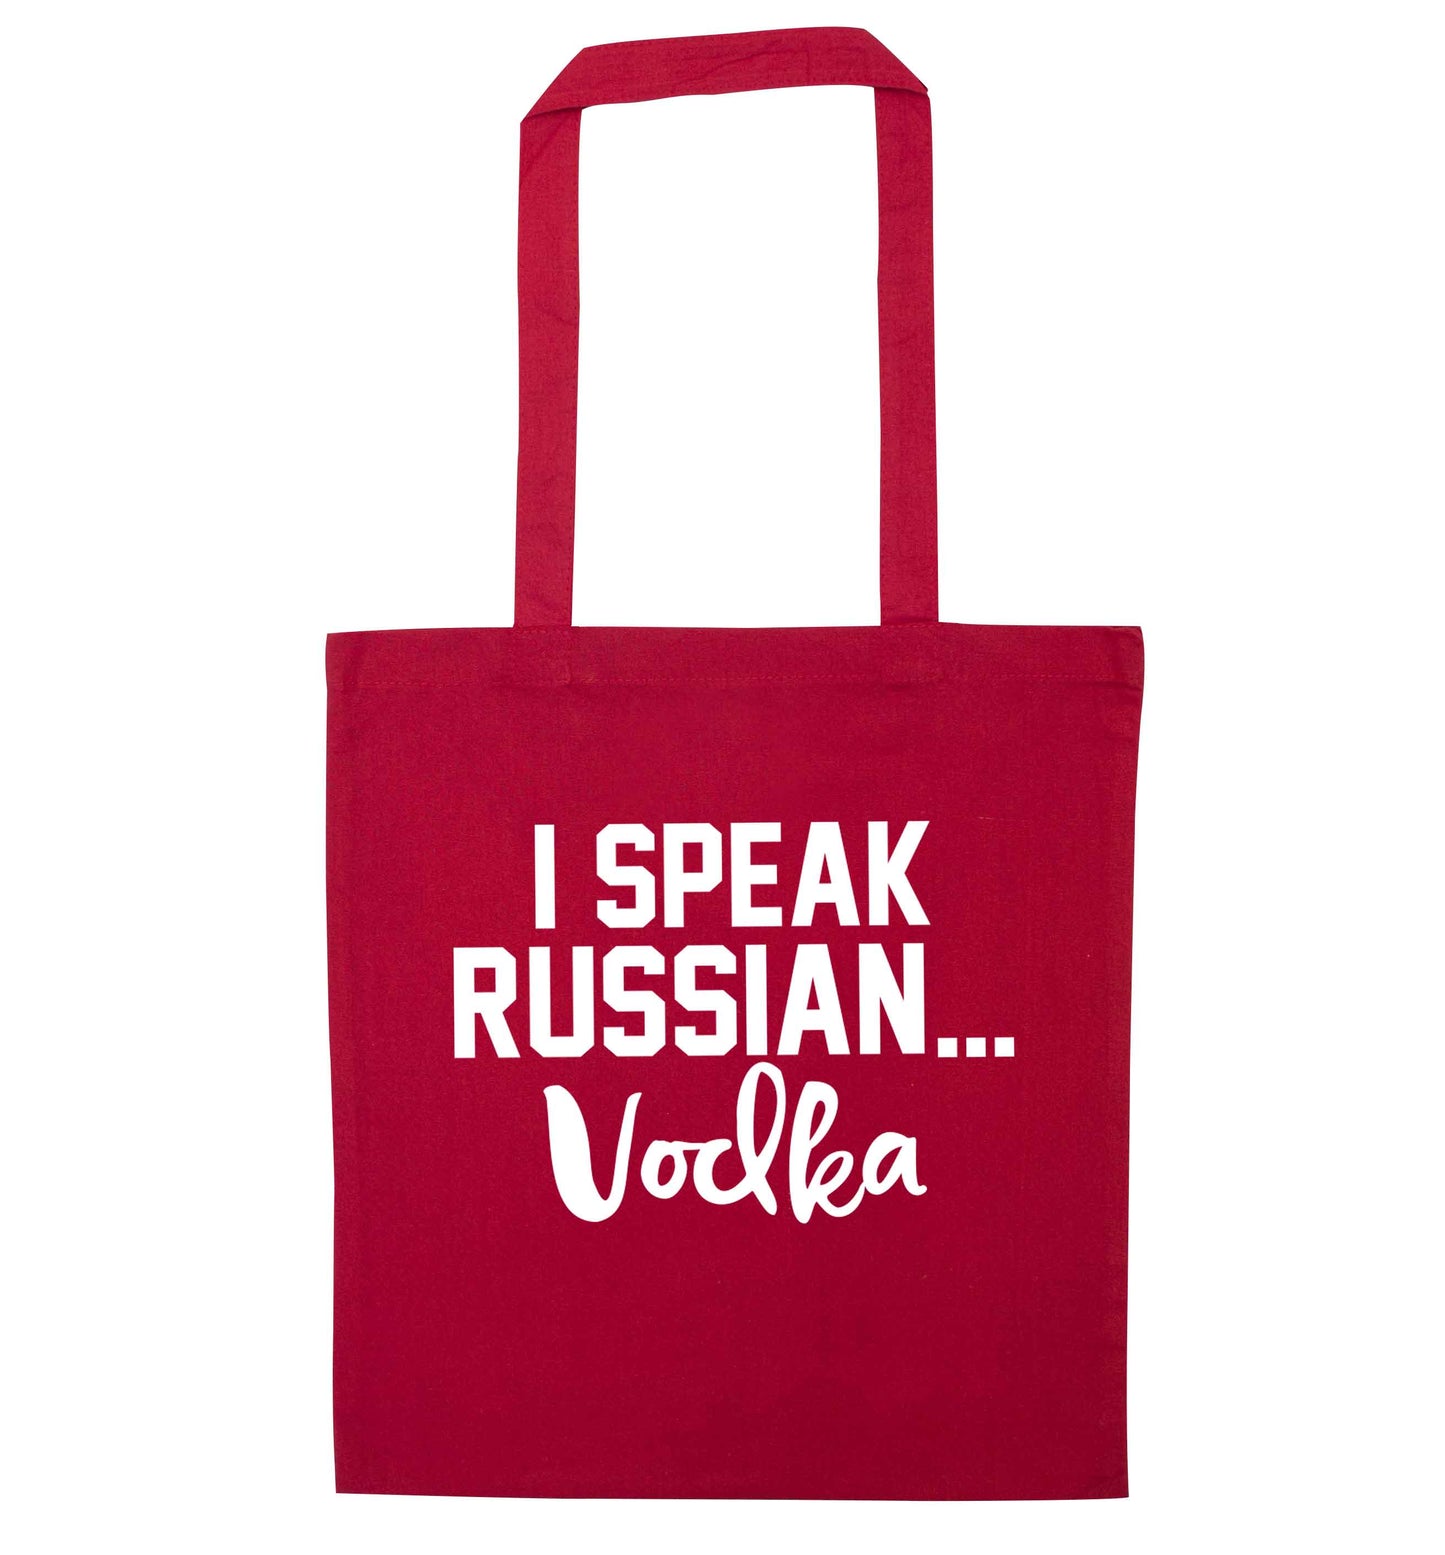 I speak russian...vodka red tote bag